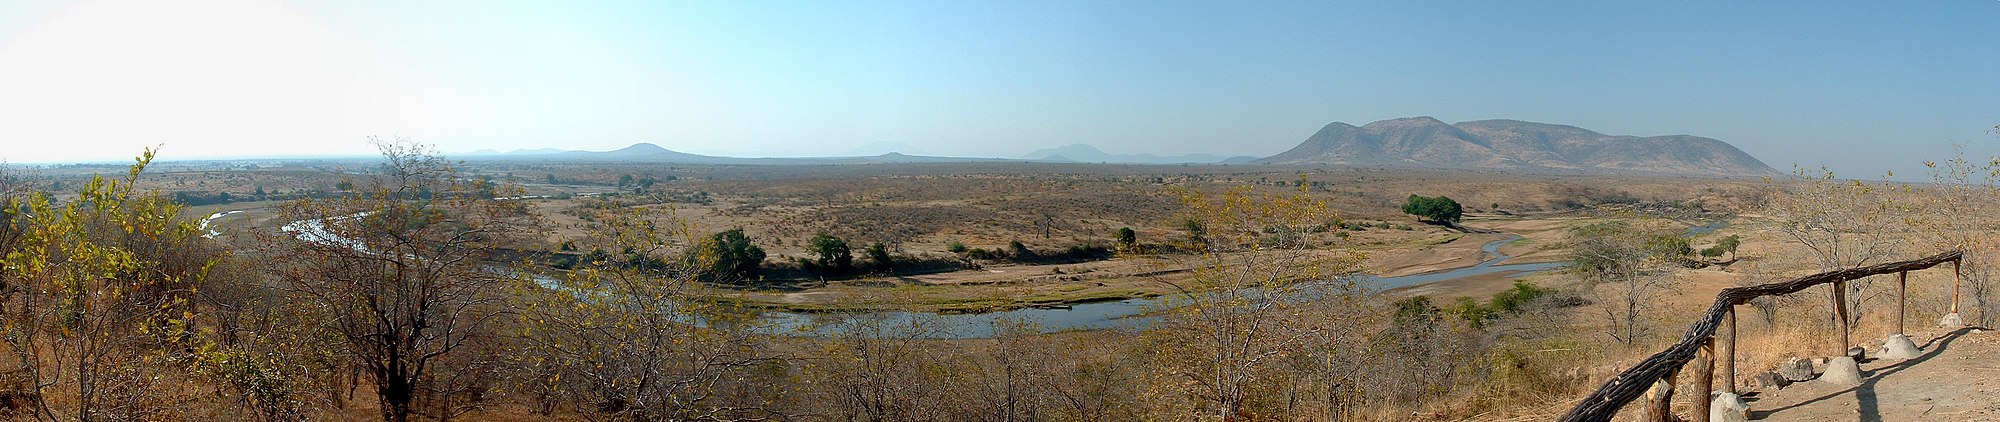 Panorama fra Ruaha nationalpark. Foto: PjvanErp